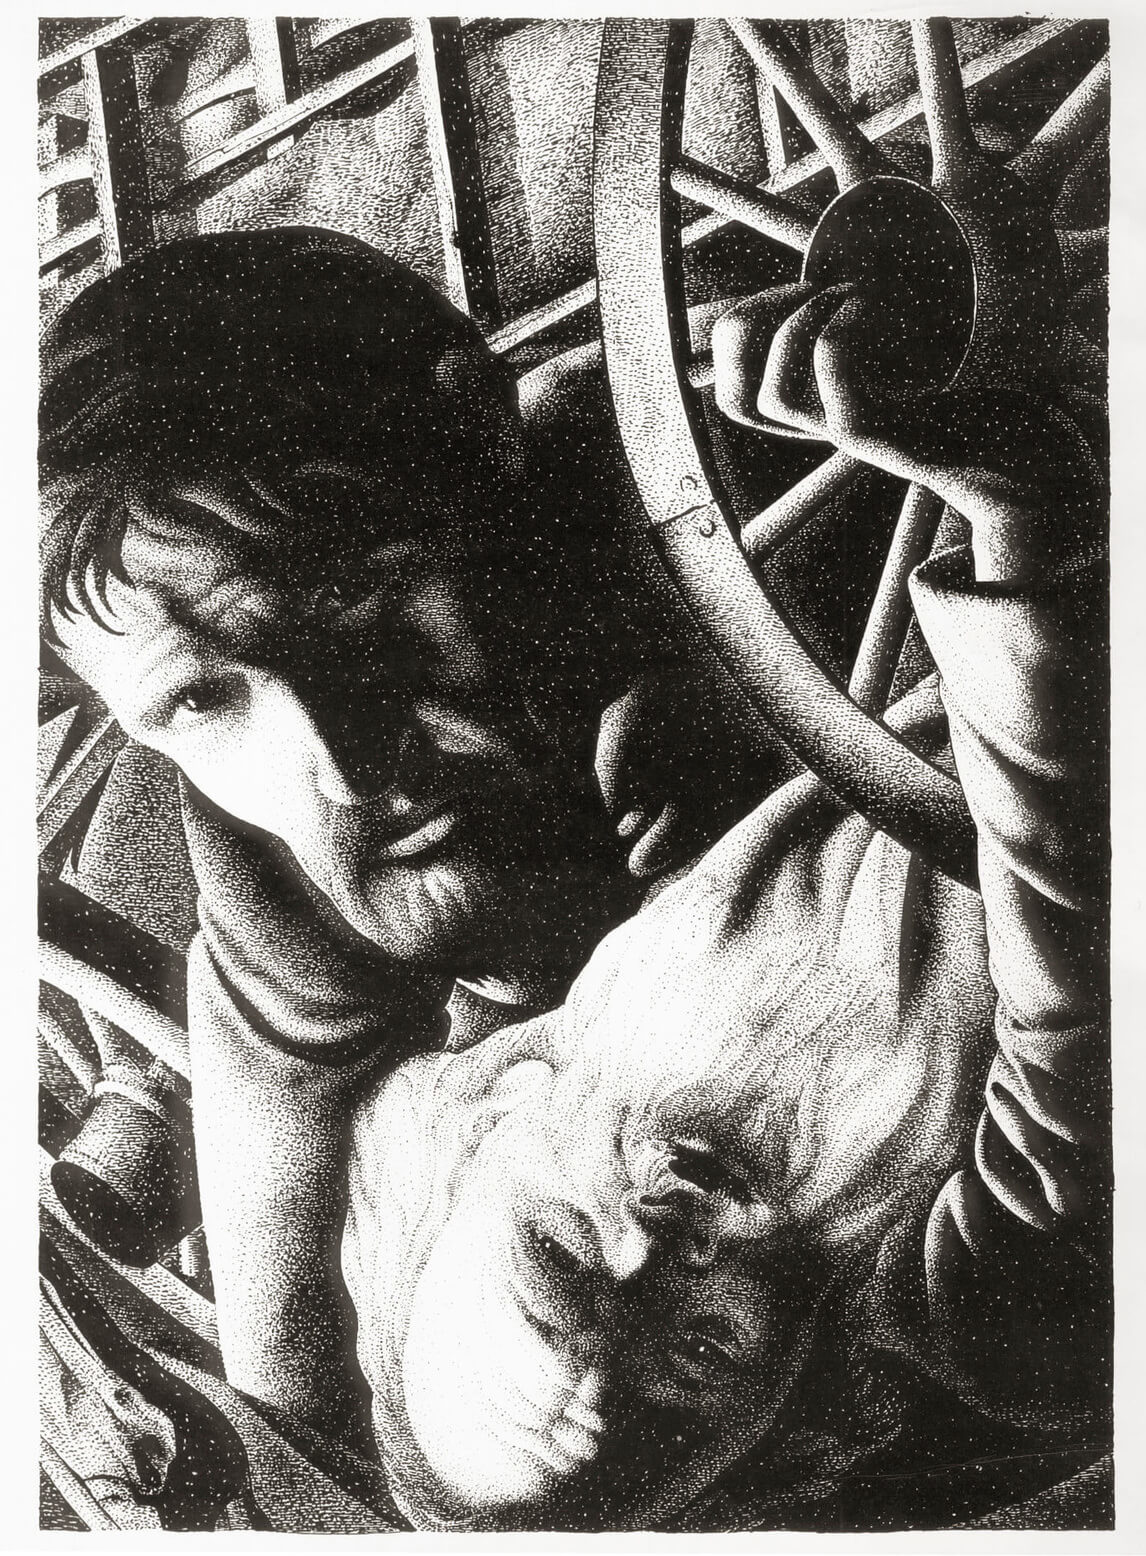 Bertram Brooker, Les Misérables #2 [Wagon Wheel] (Les Misérables no 2 [roue de chariot]), 1936